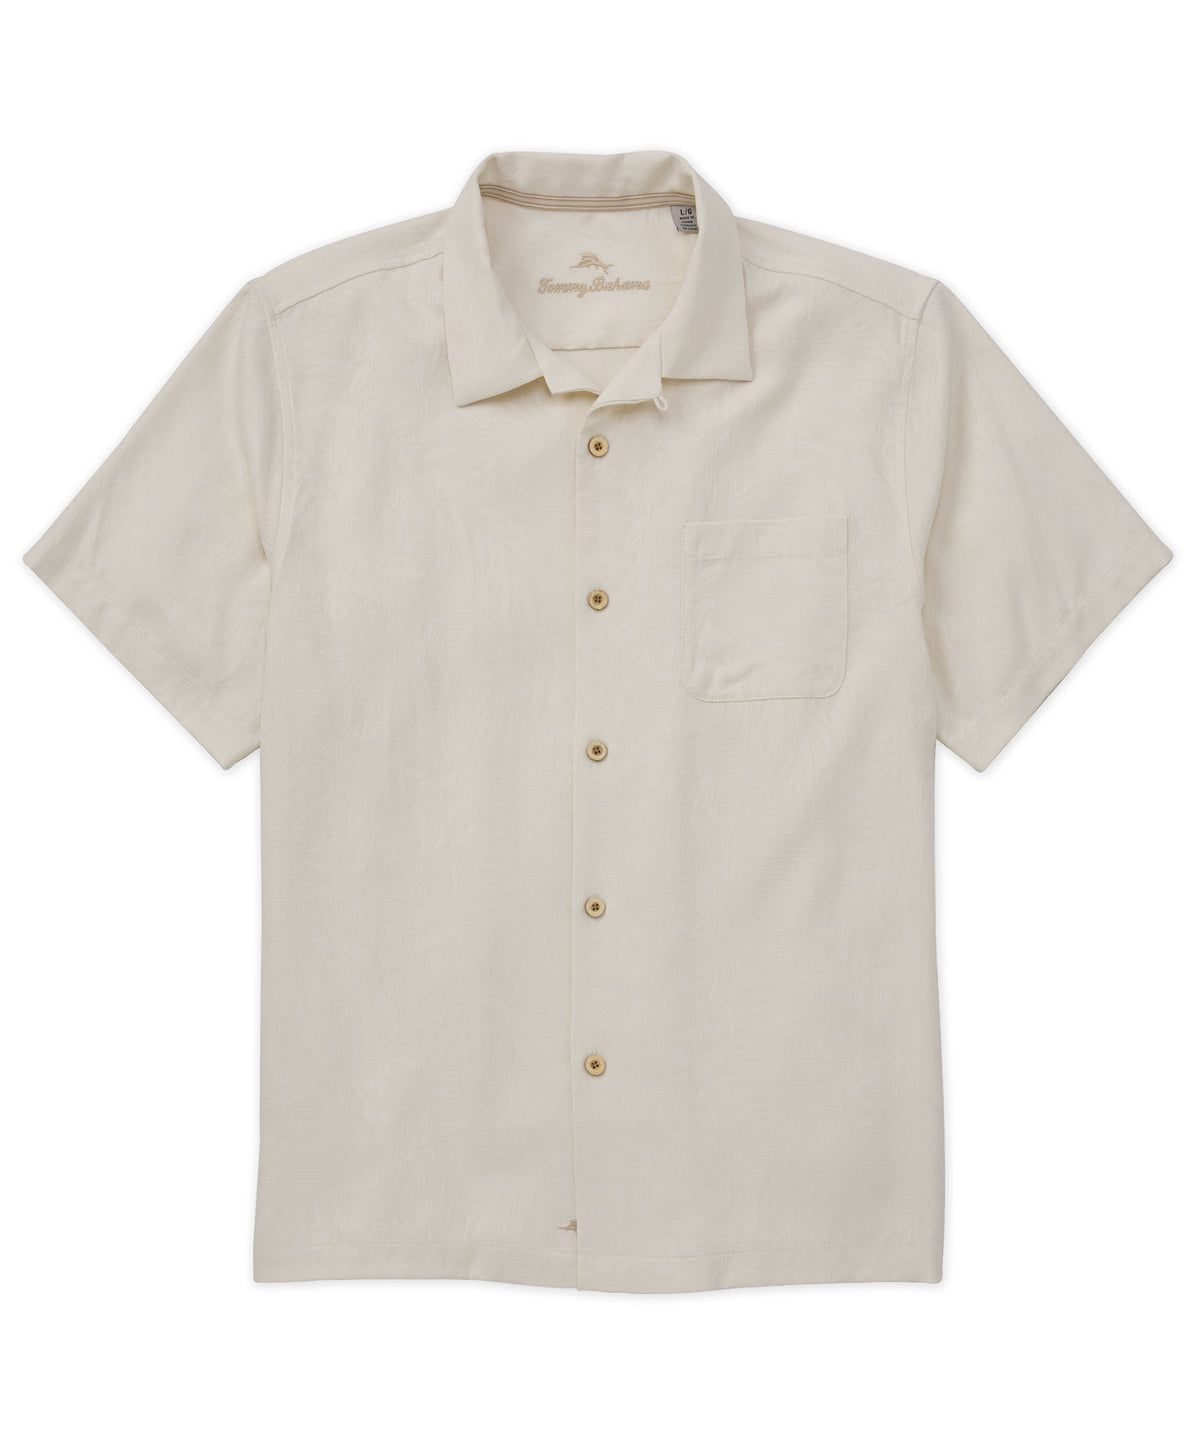 Tommy Bahama Short Sleeve Topic Isles Camp Shirt, Big & Tall